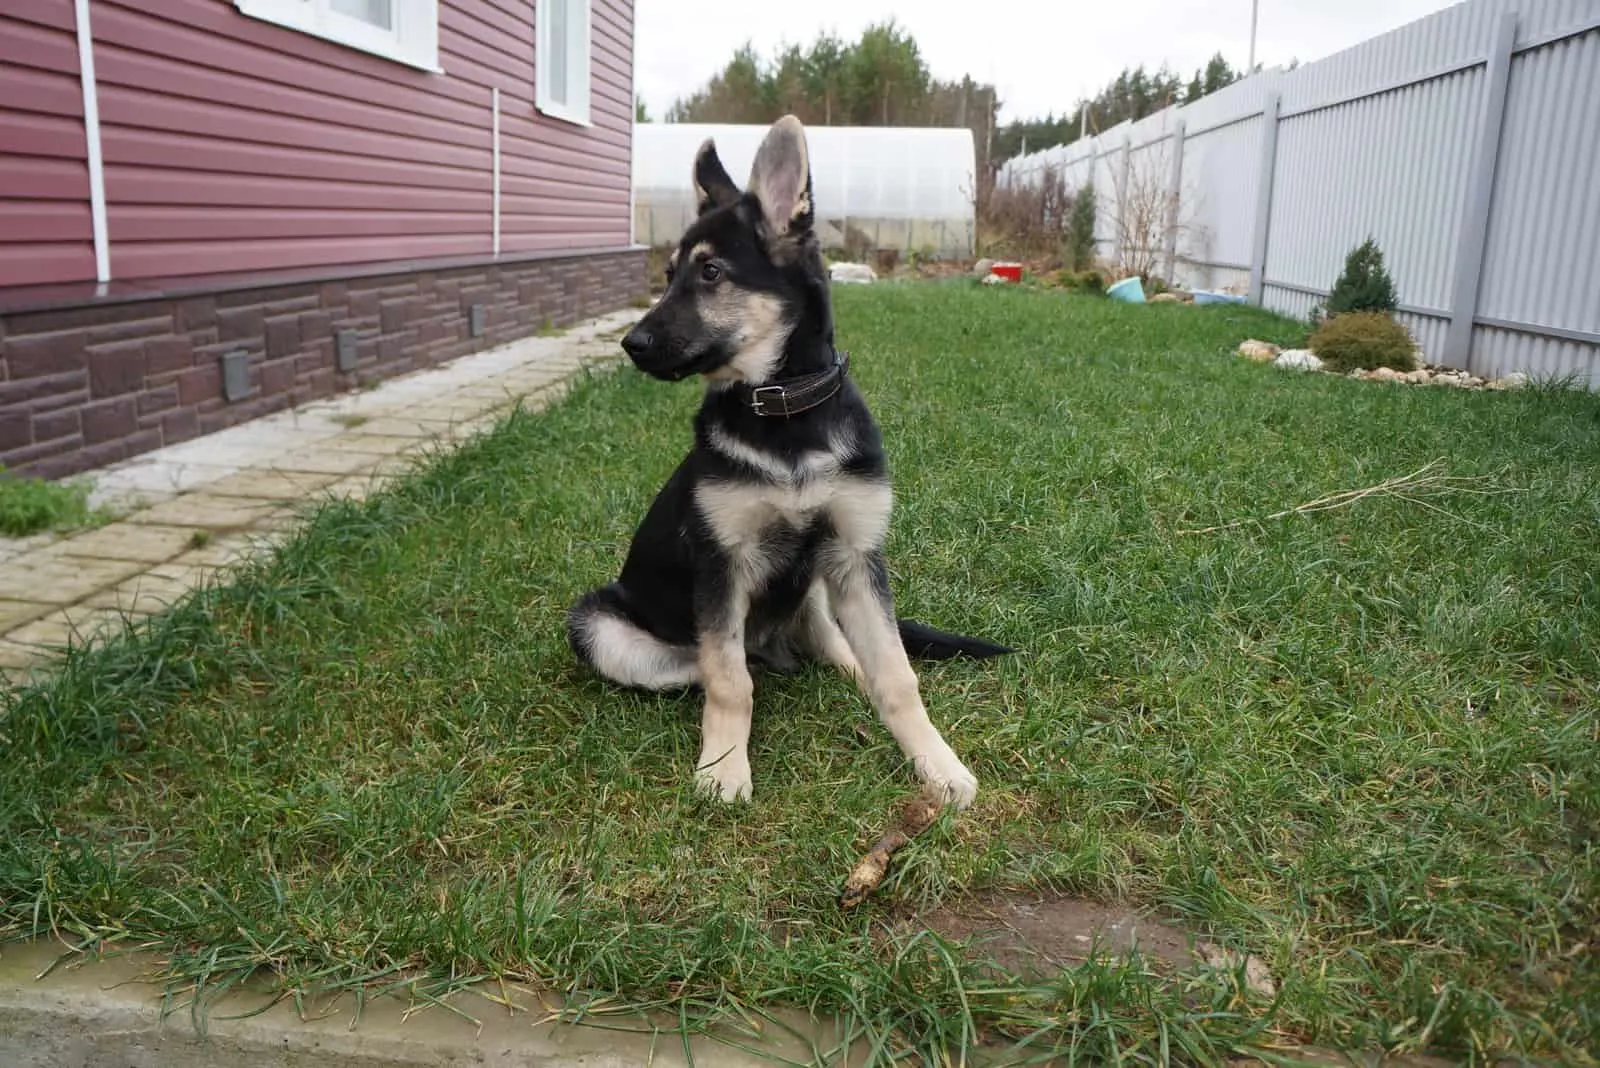 Eastern European shepherd dog sits with its ears raised